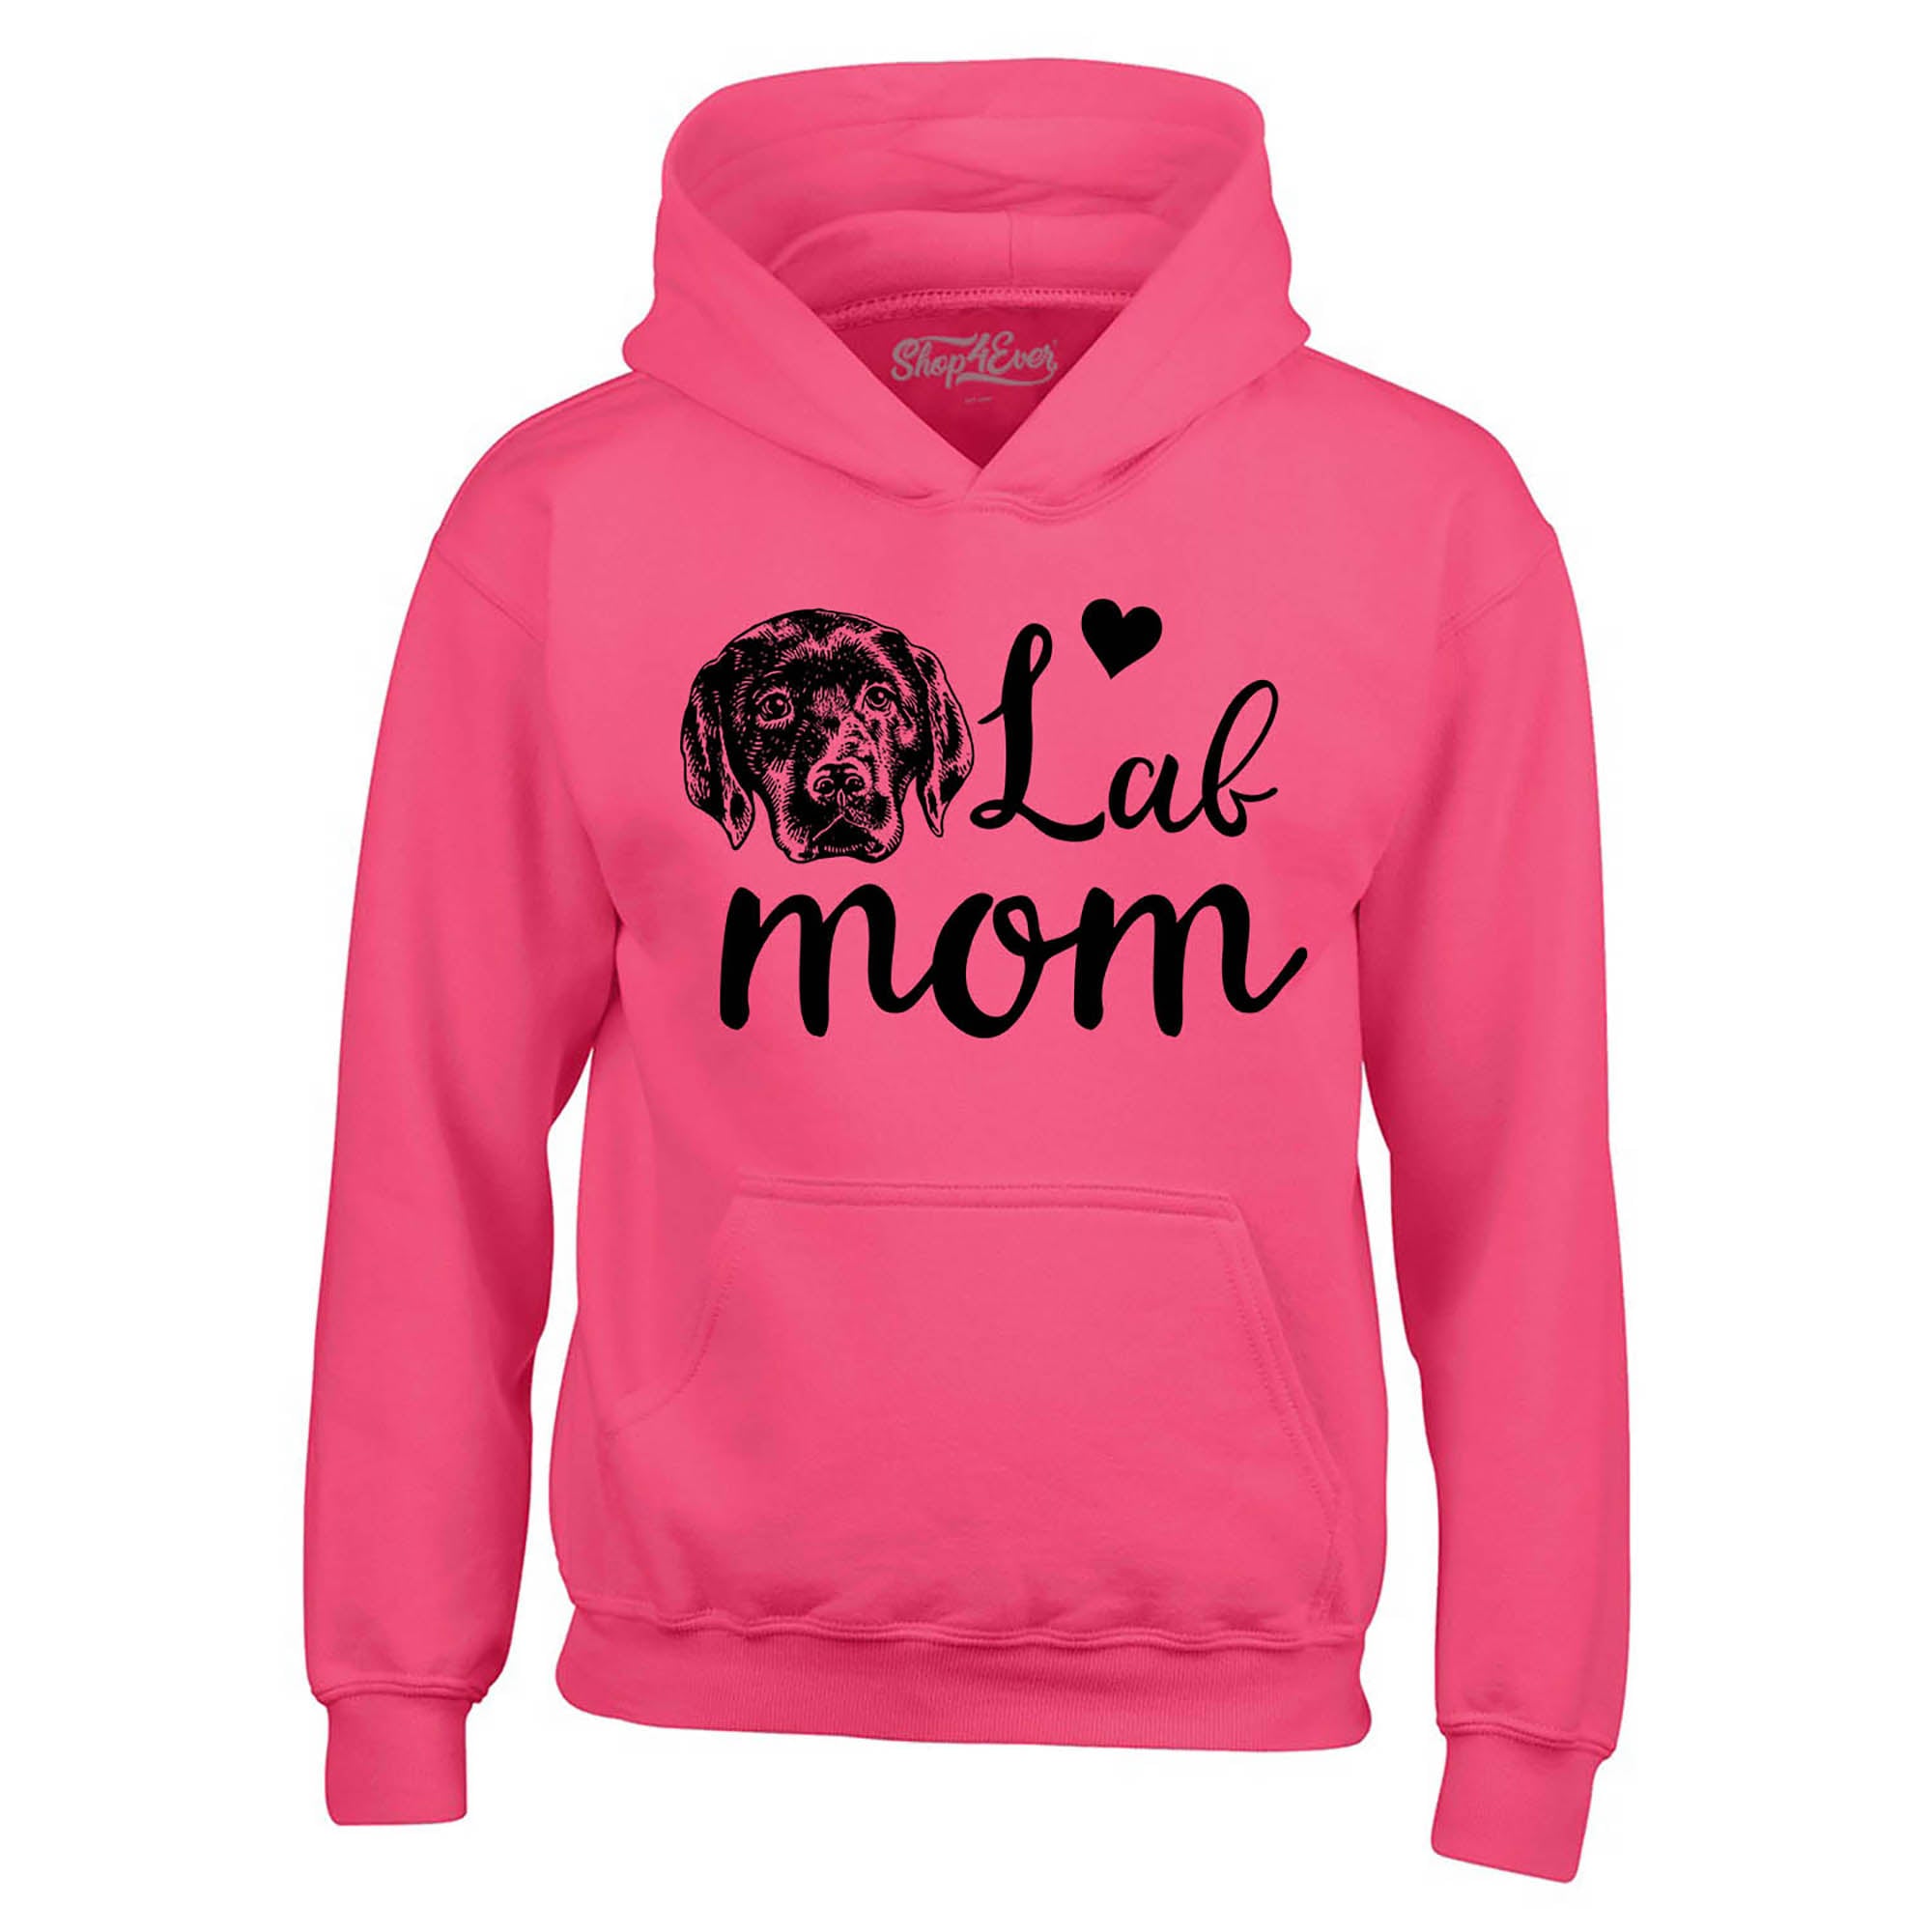 Black Lab Mom Hoodie Sweatshirts